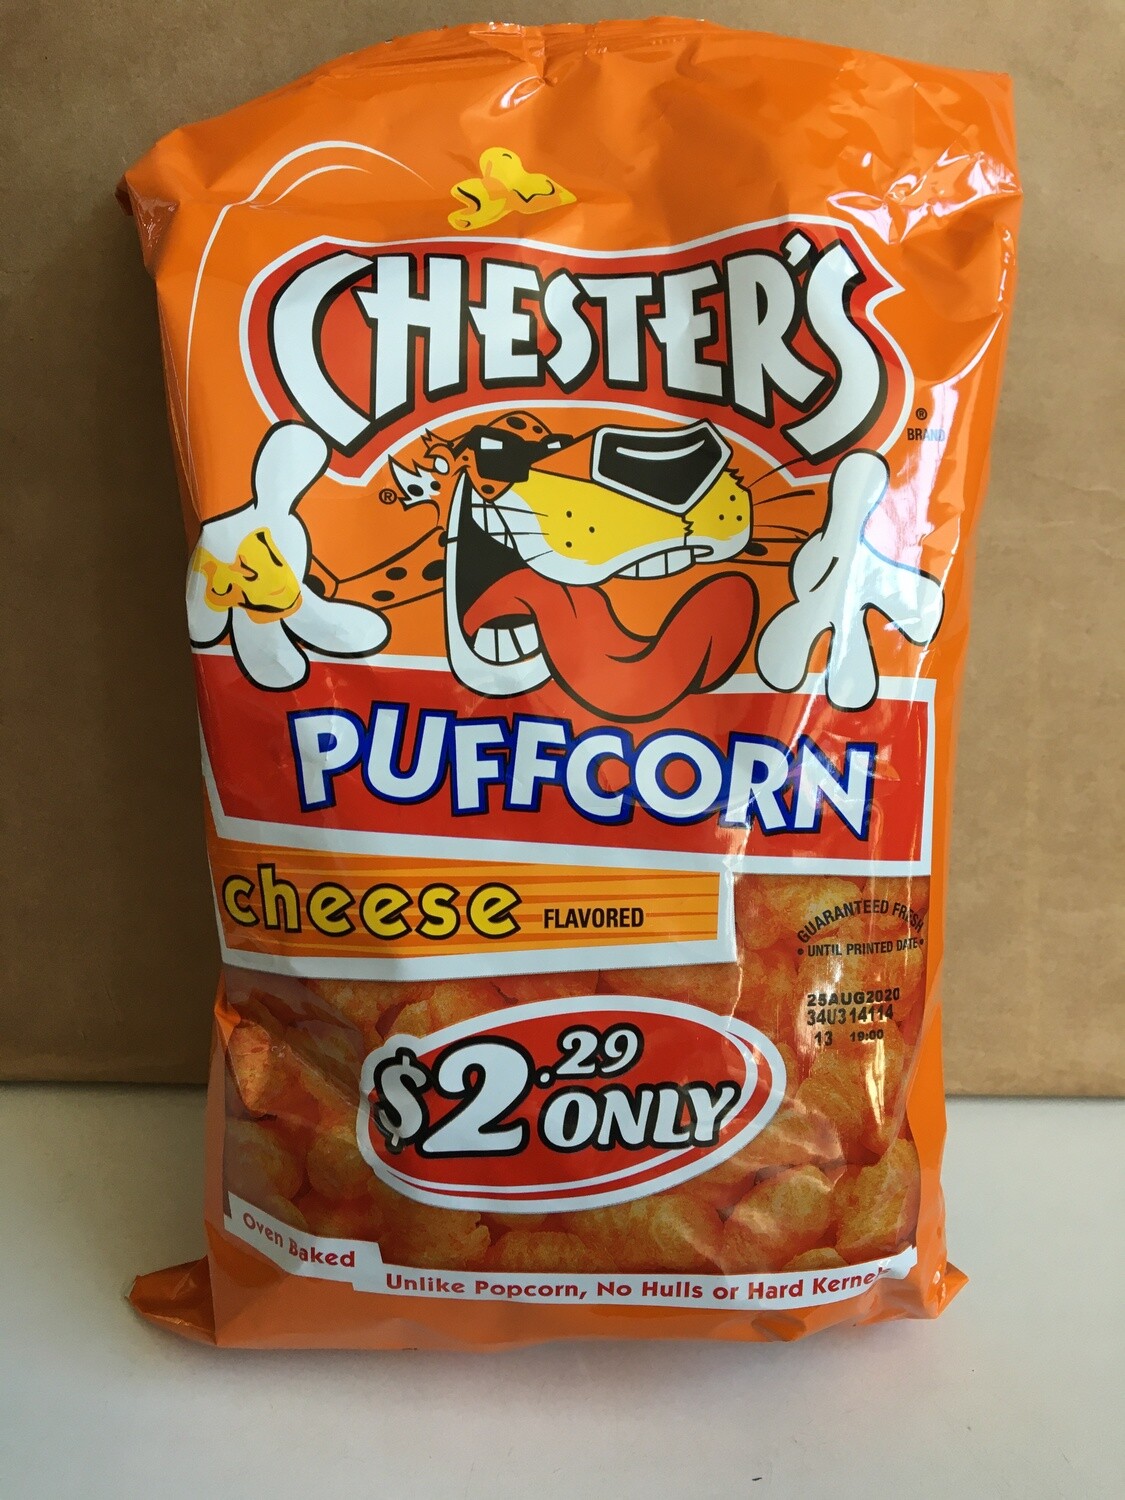 Snack / Popcorn / Chester's Cheese Puffcorn 4.25 oz.